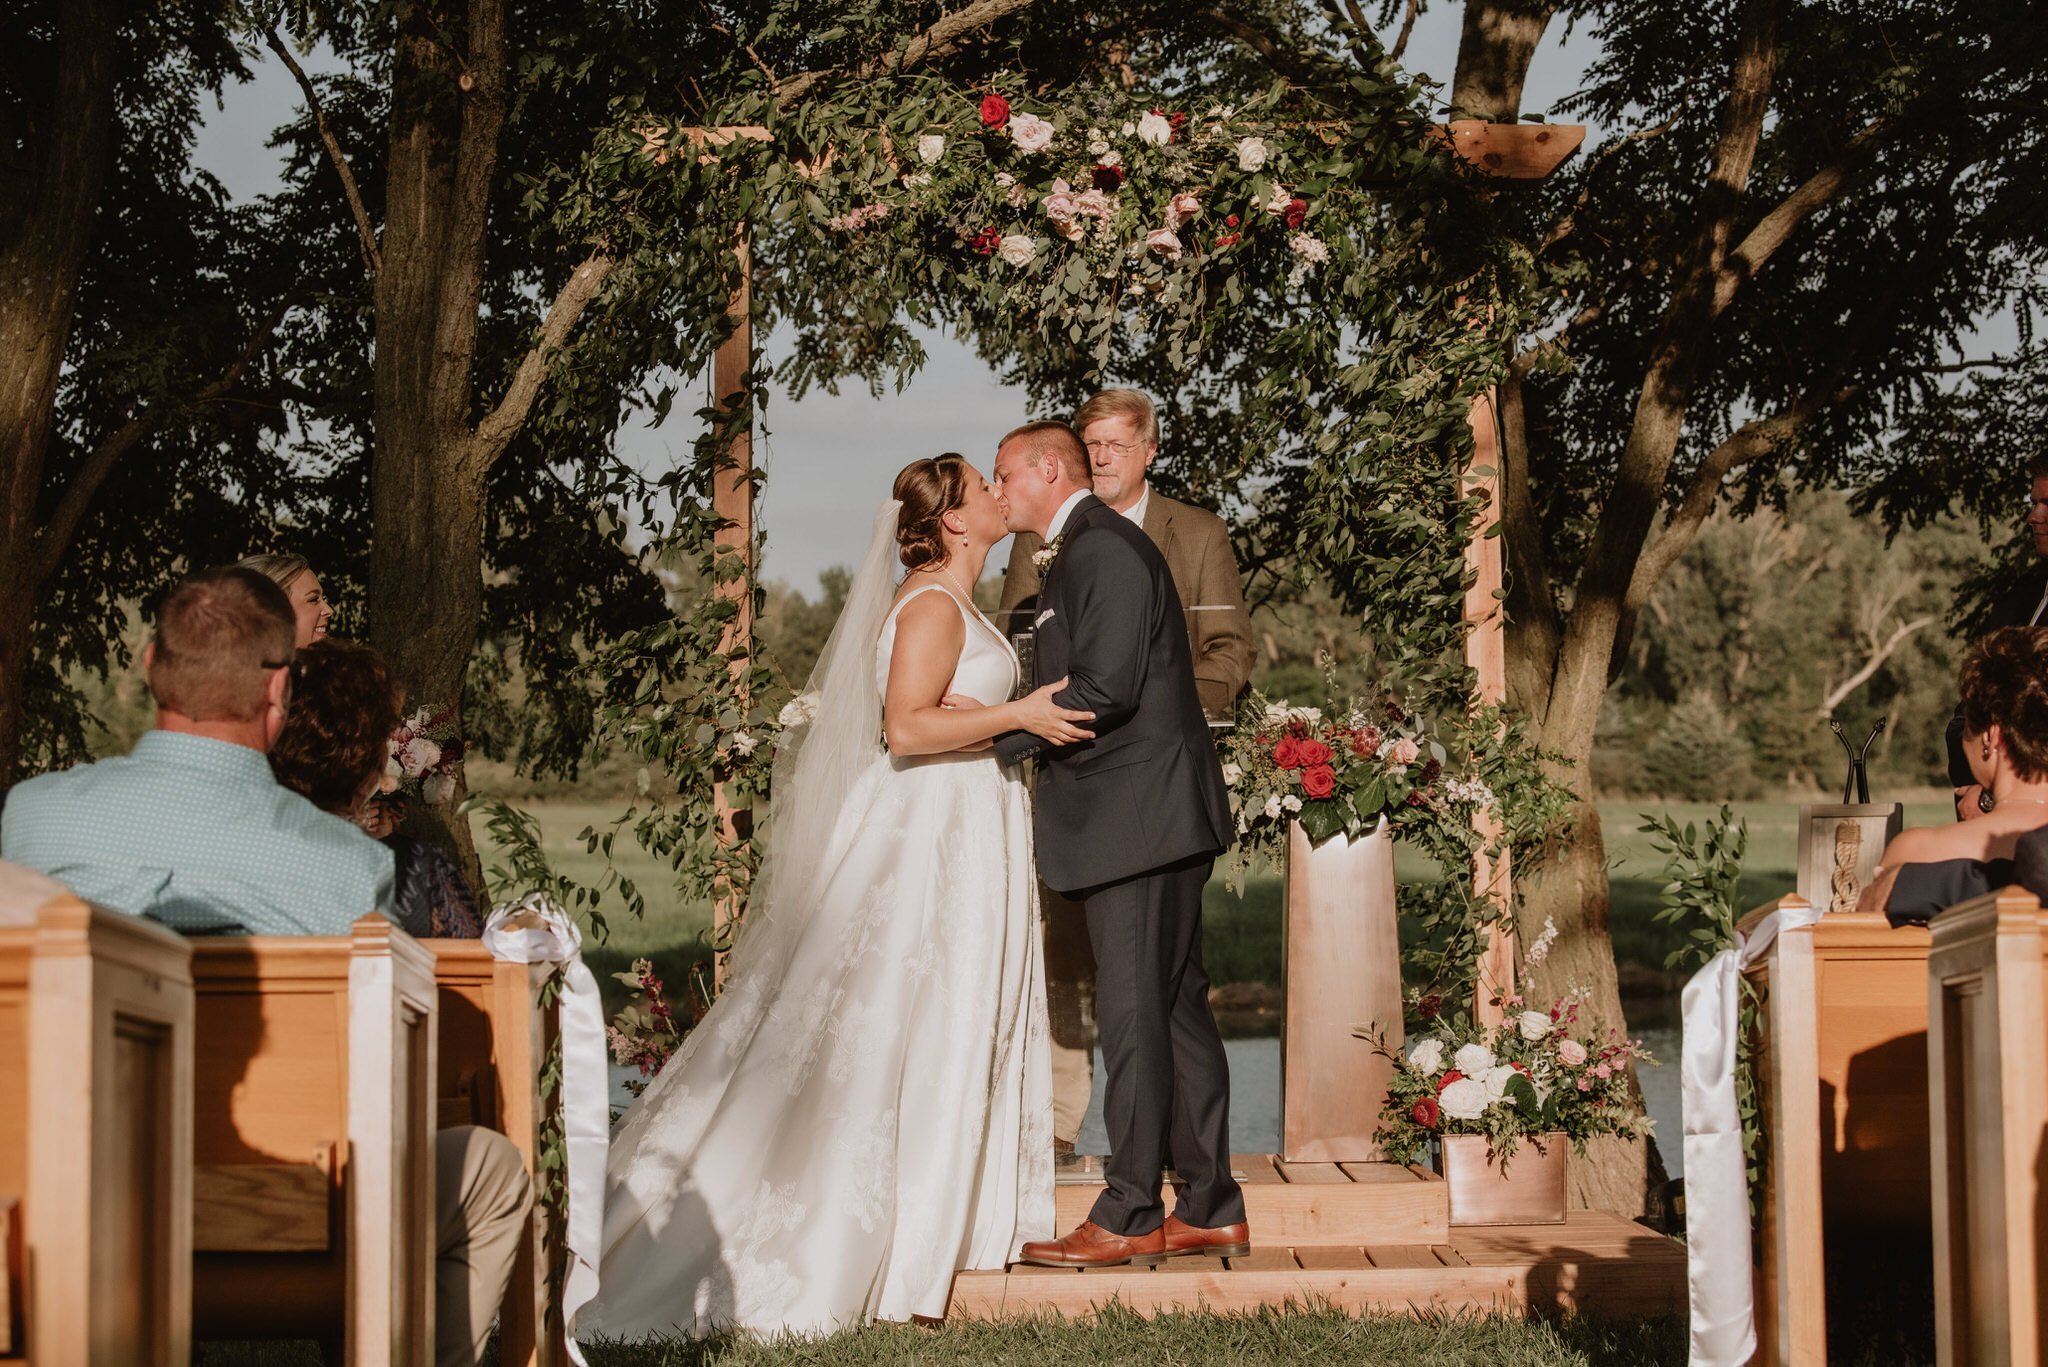 Kaylie-Sirek-Photography-Backyard-Wedding-110.jpg